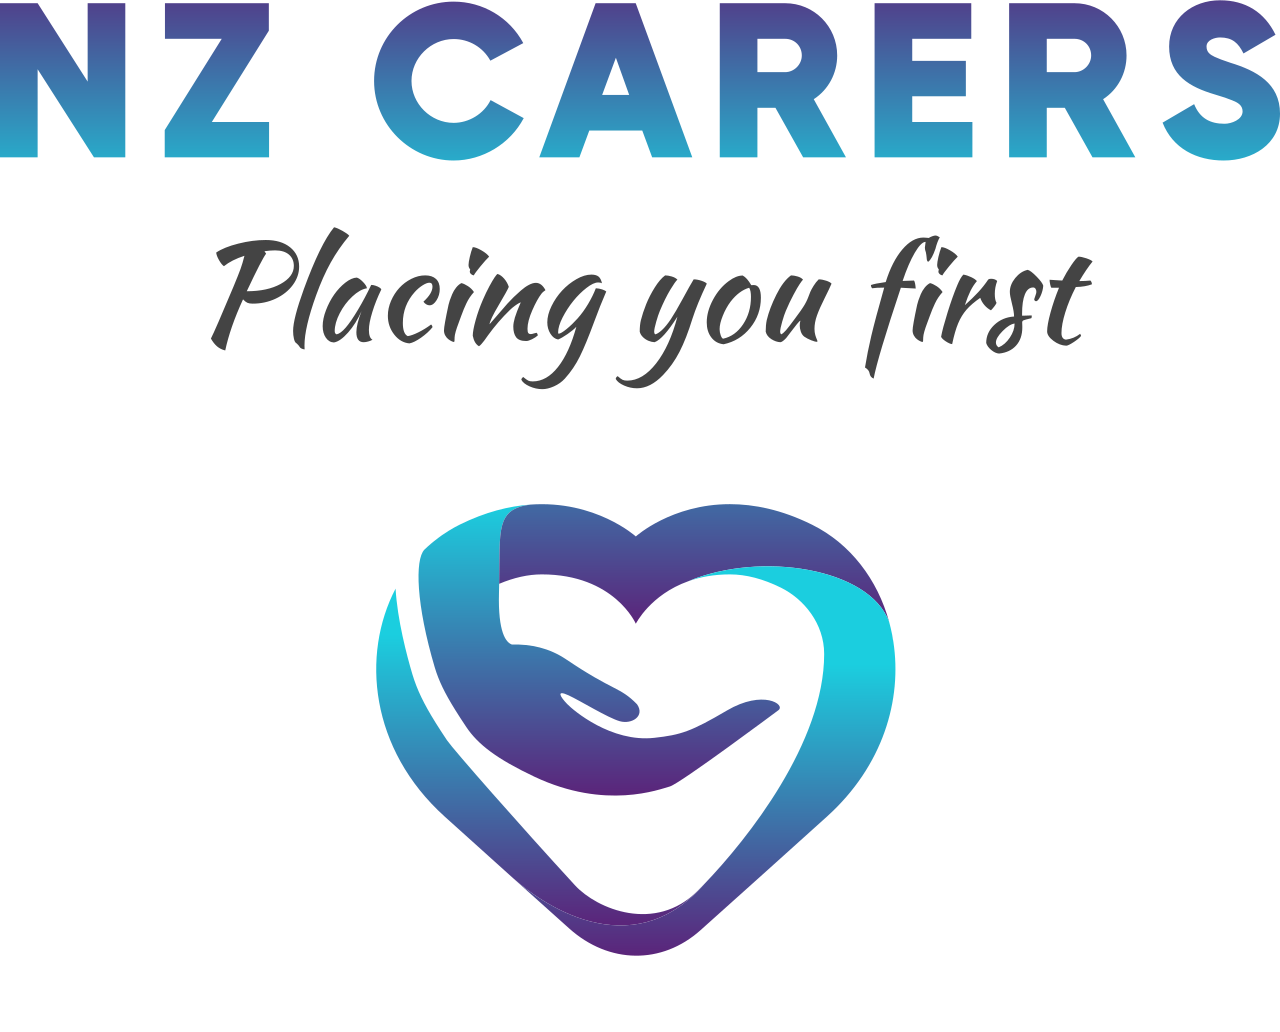 NZ Carers's logo